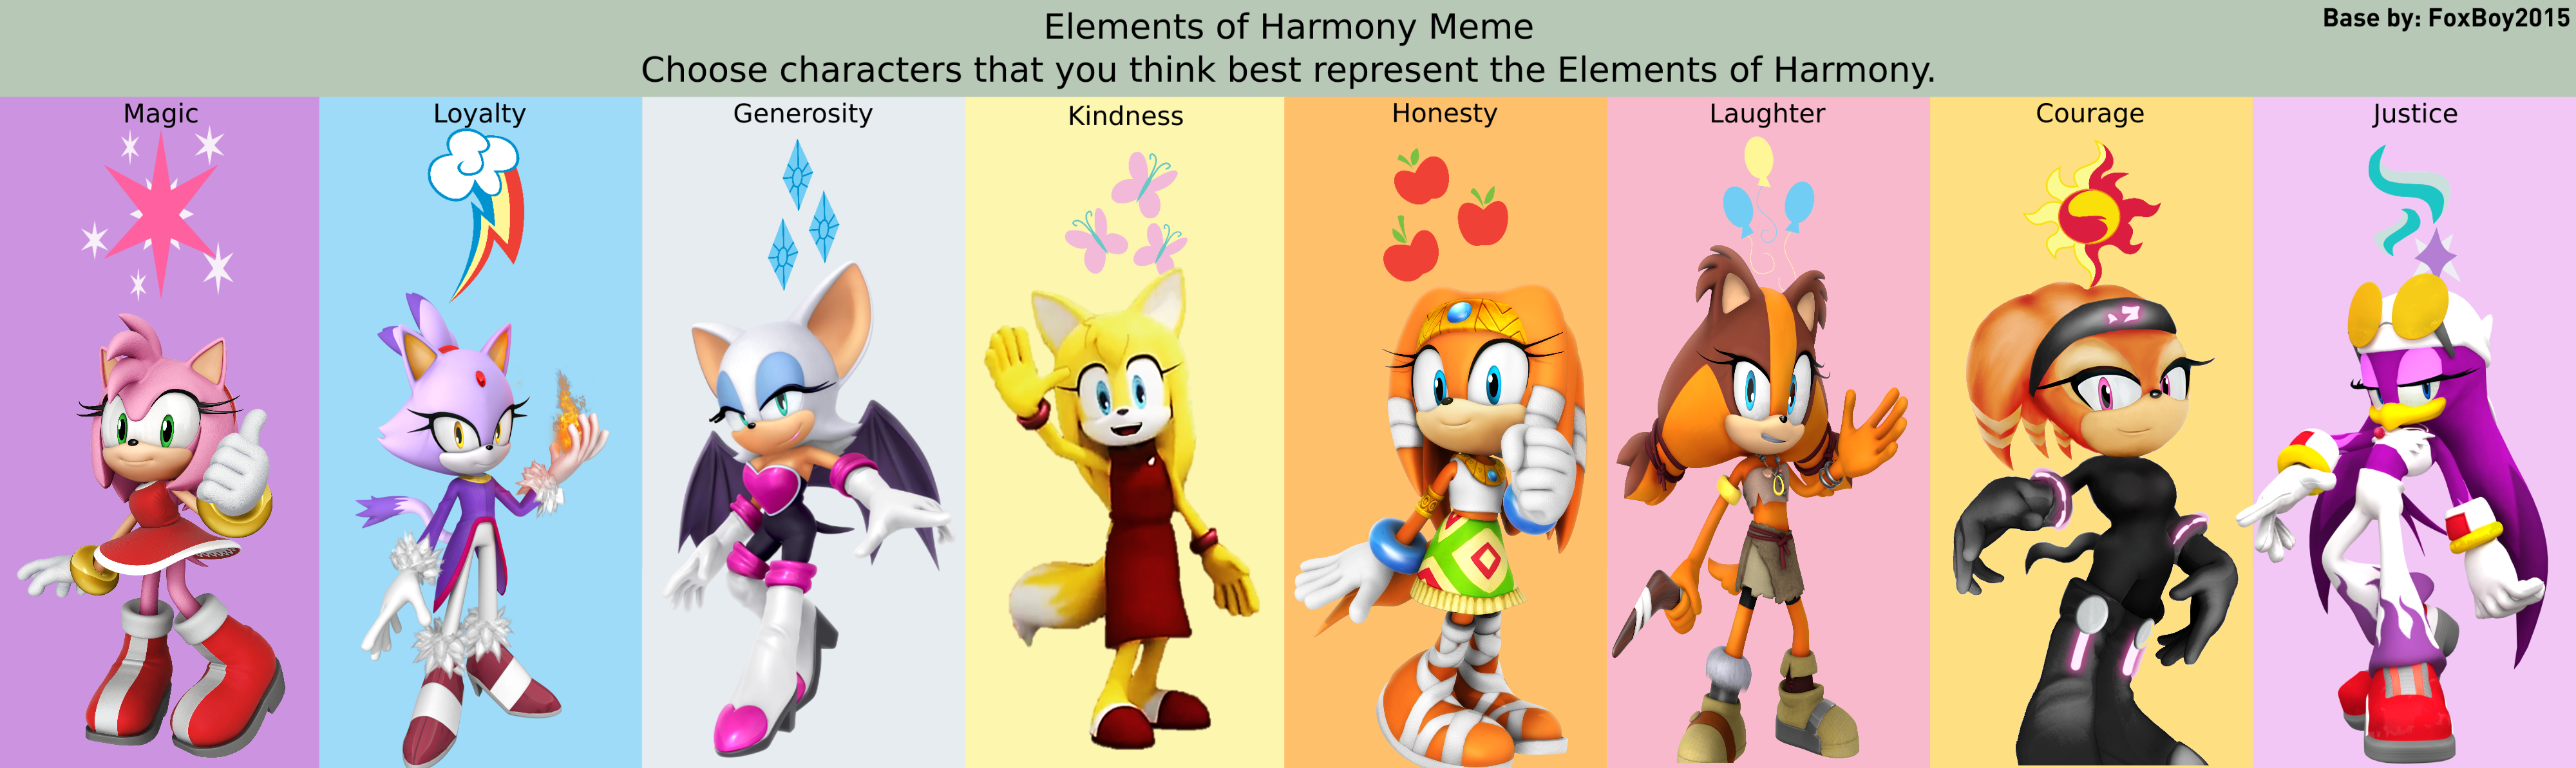 mlp elements of harmony base